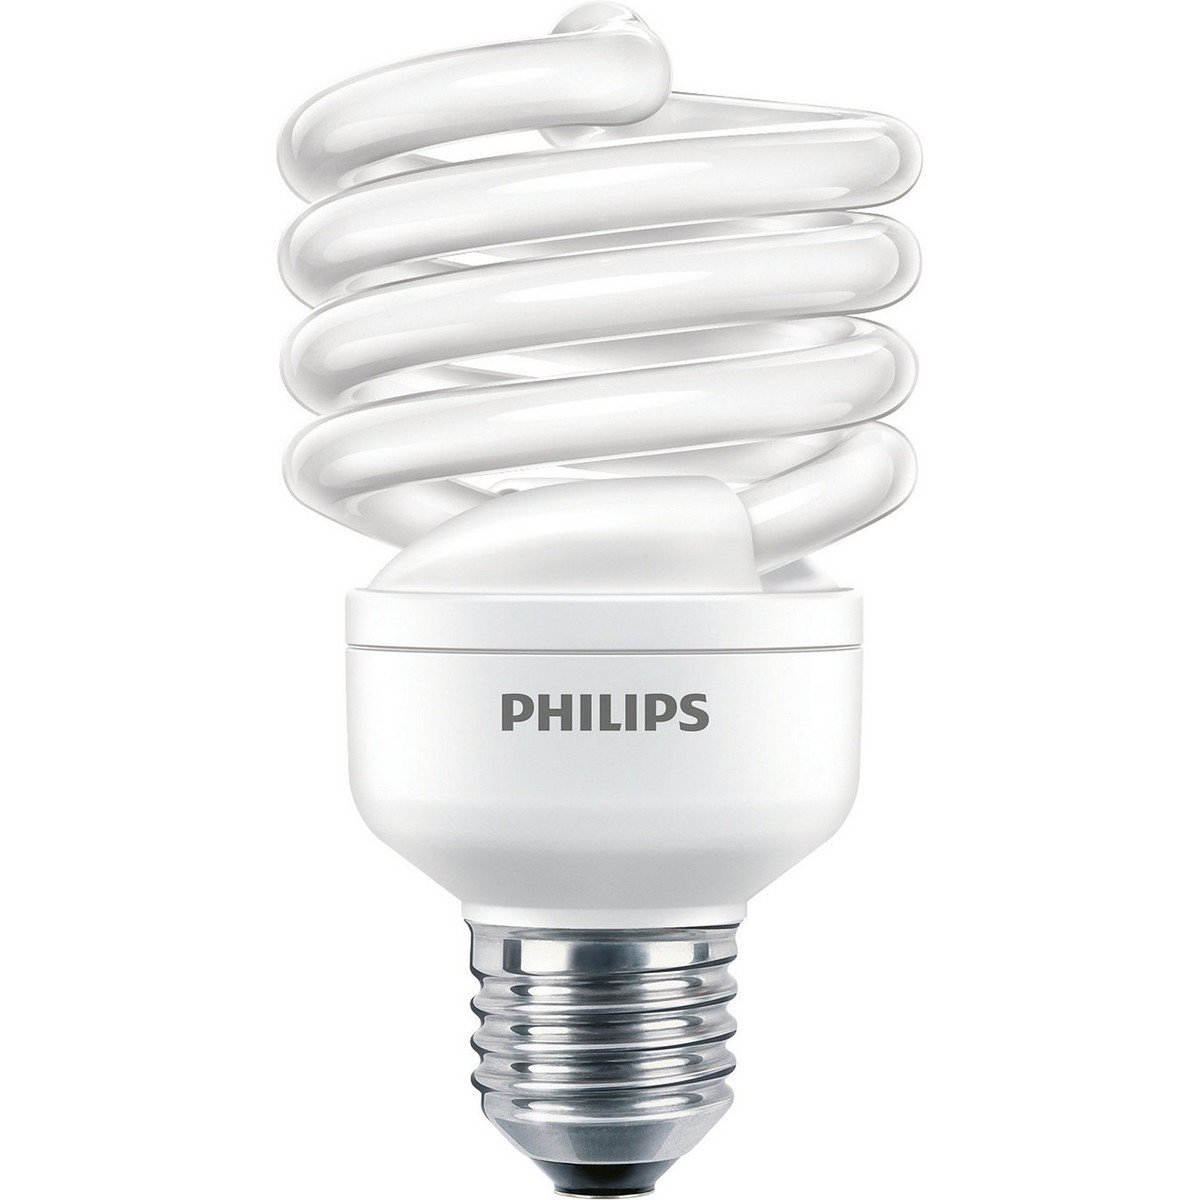 Philips Tornado Energy Saving CFL Bulb 23W E27 CDL 3pcs